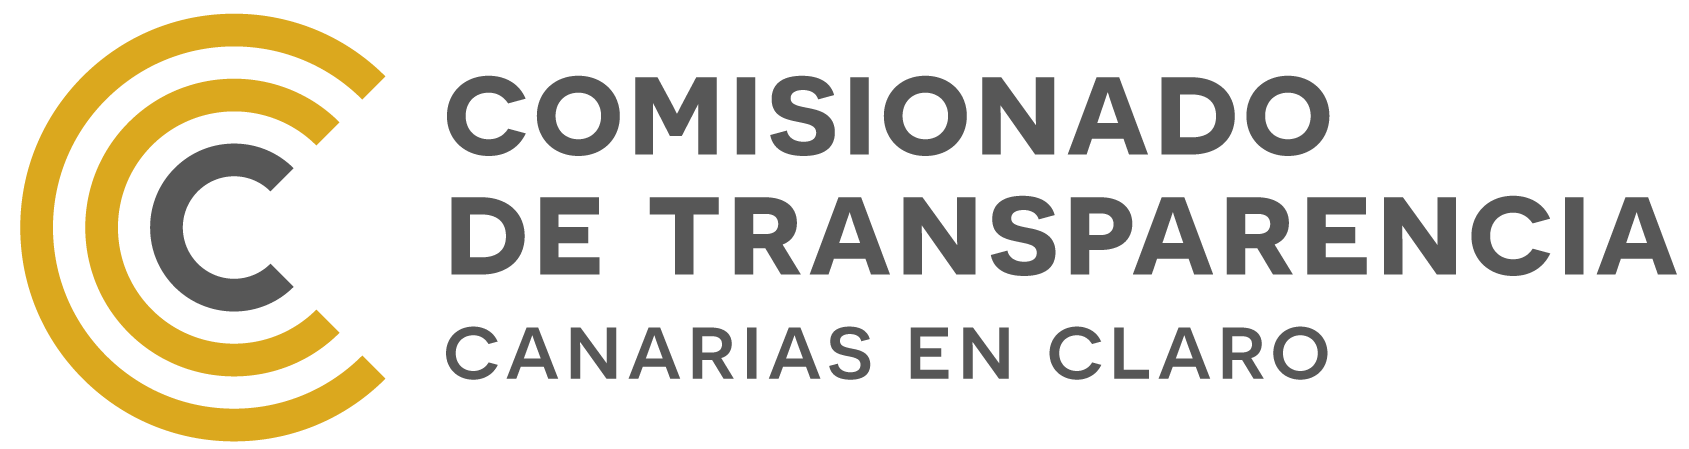 Comisionado de transparencia Canarias